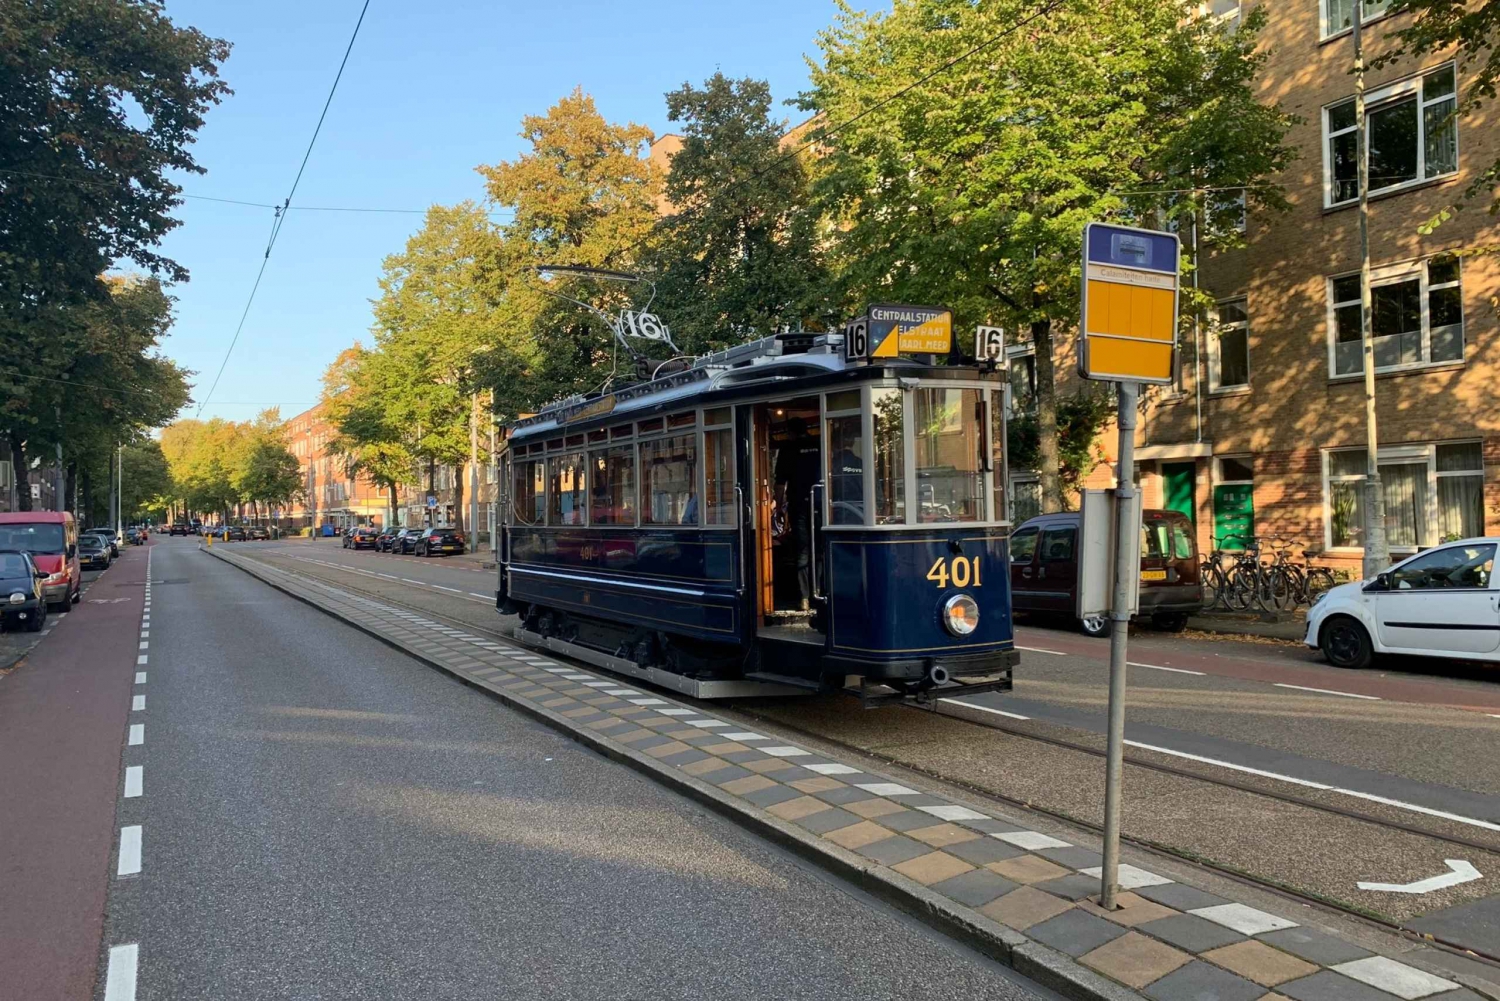 Amsterdam: Historic Tram Ride